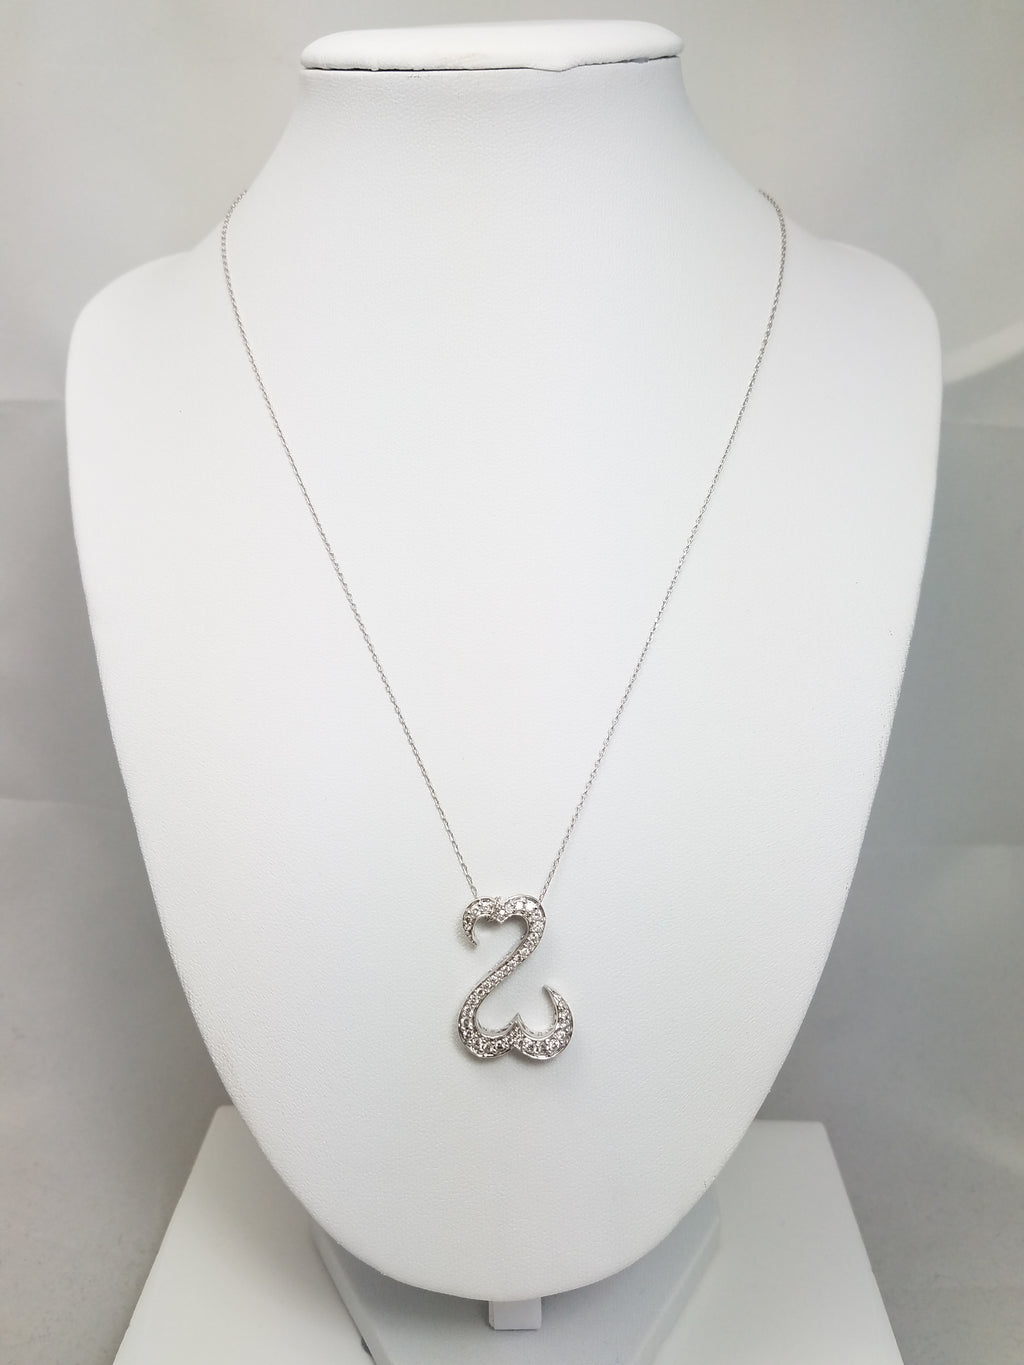 Infamous "Open Hearts" 14k White Gold Pendant Necklace